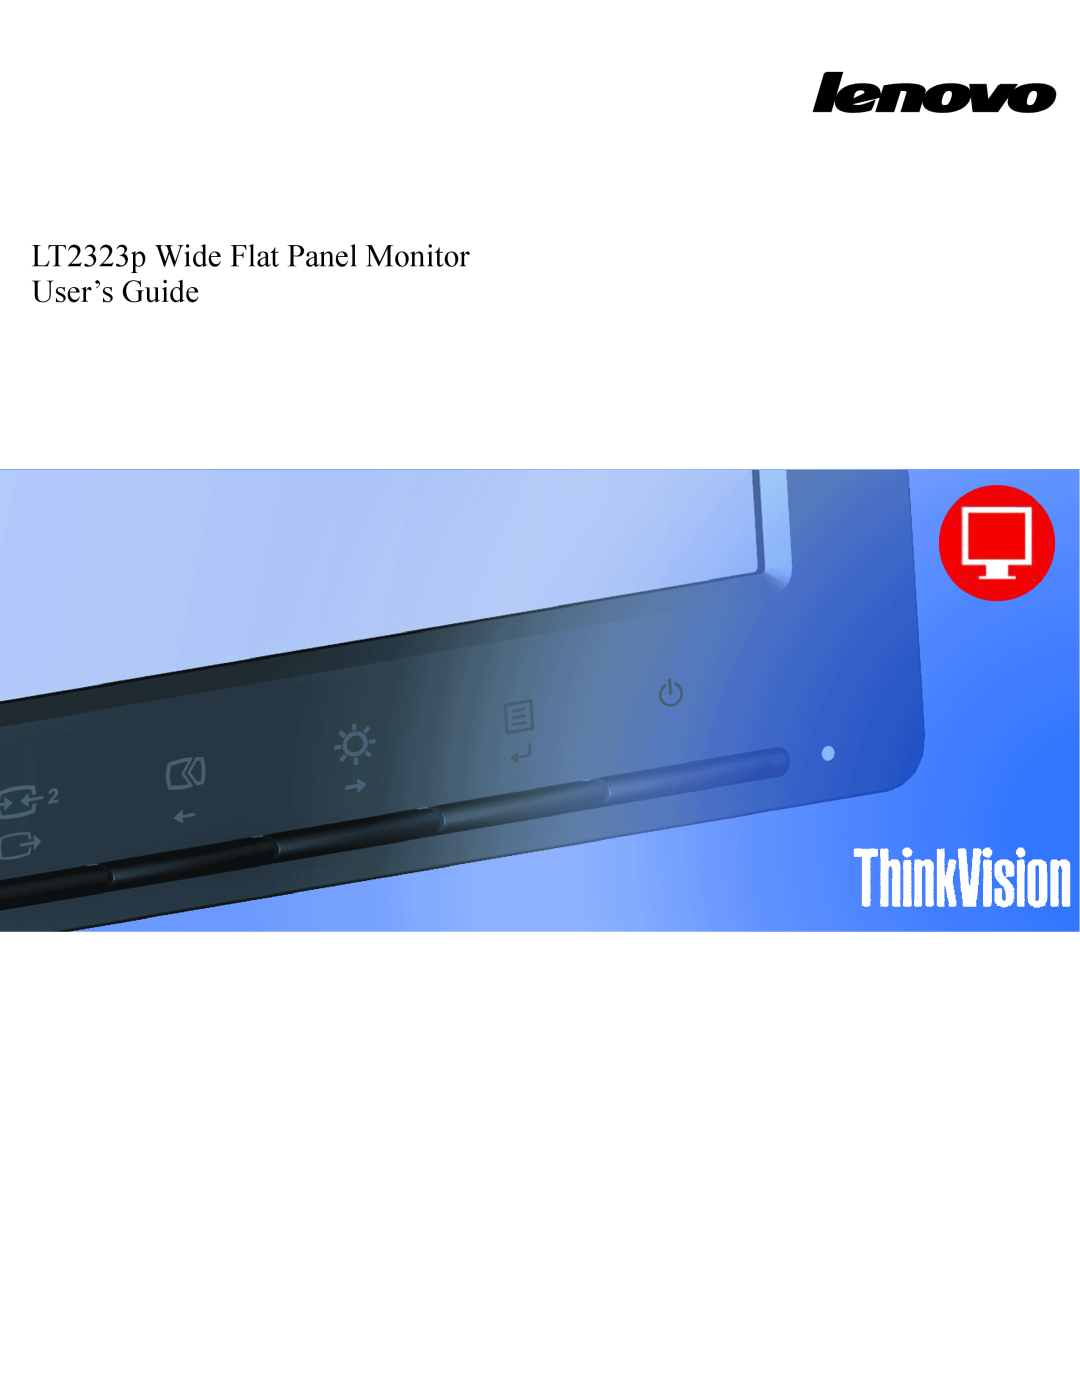 Lenovo 3024HC1 manual LT2323p Wide Flat Panel Monitor User’s Guide 